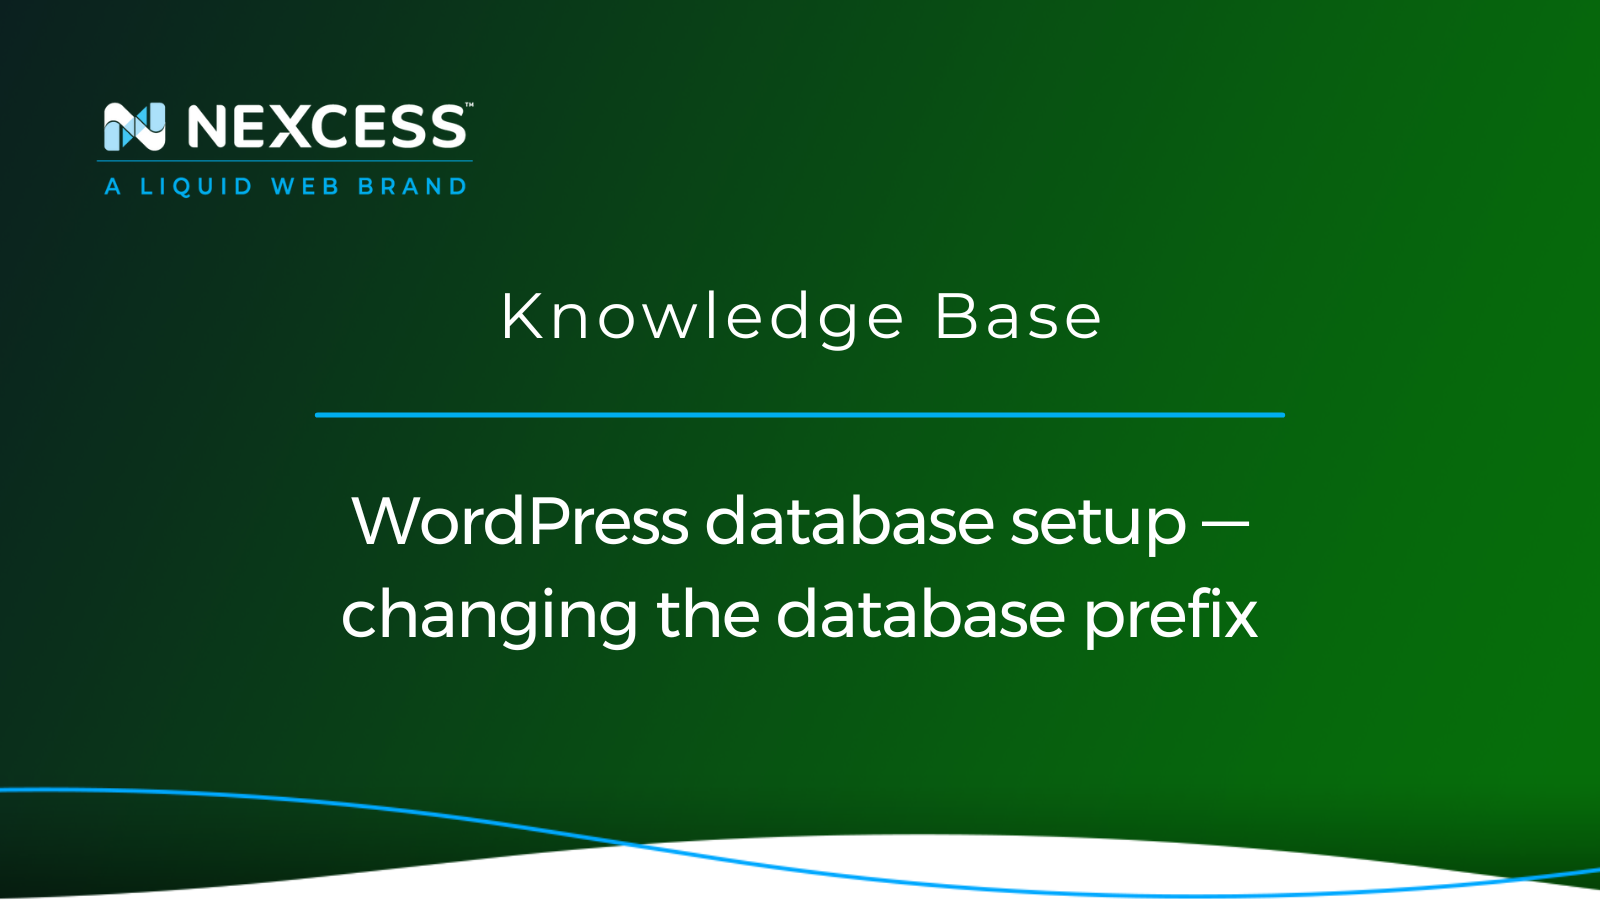 WordPress database setup — changing the database prefix